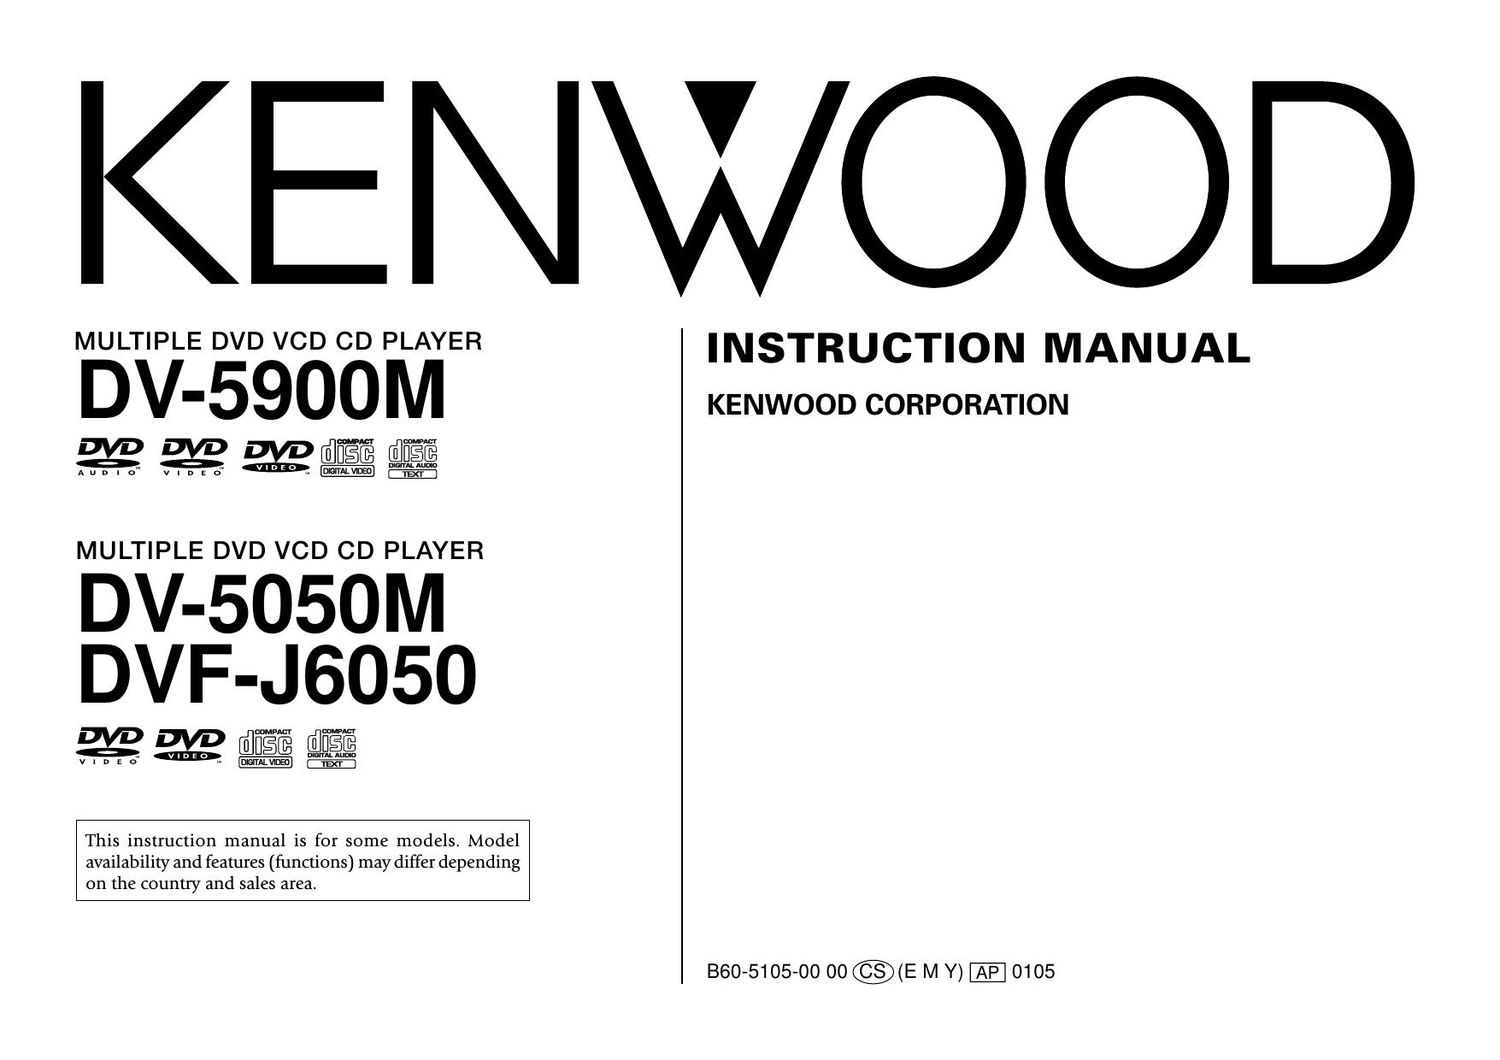 Kenwood DVFJ 6050 Owners Manual